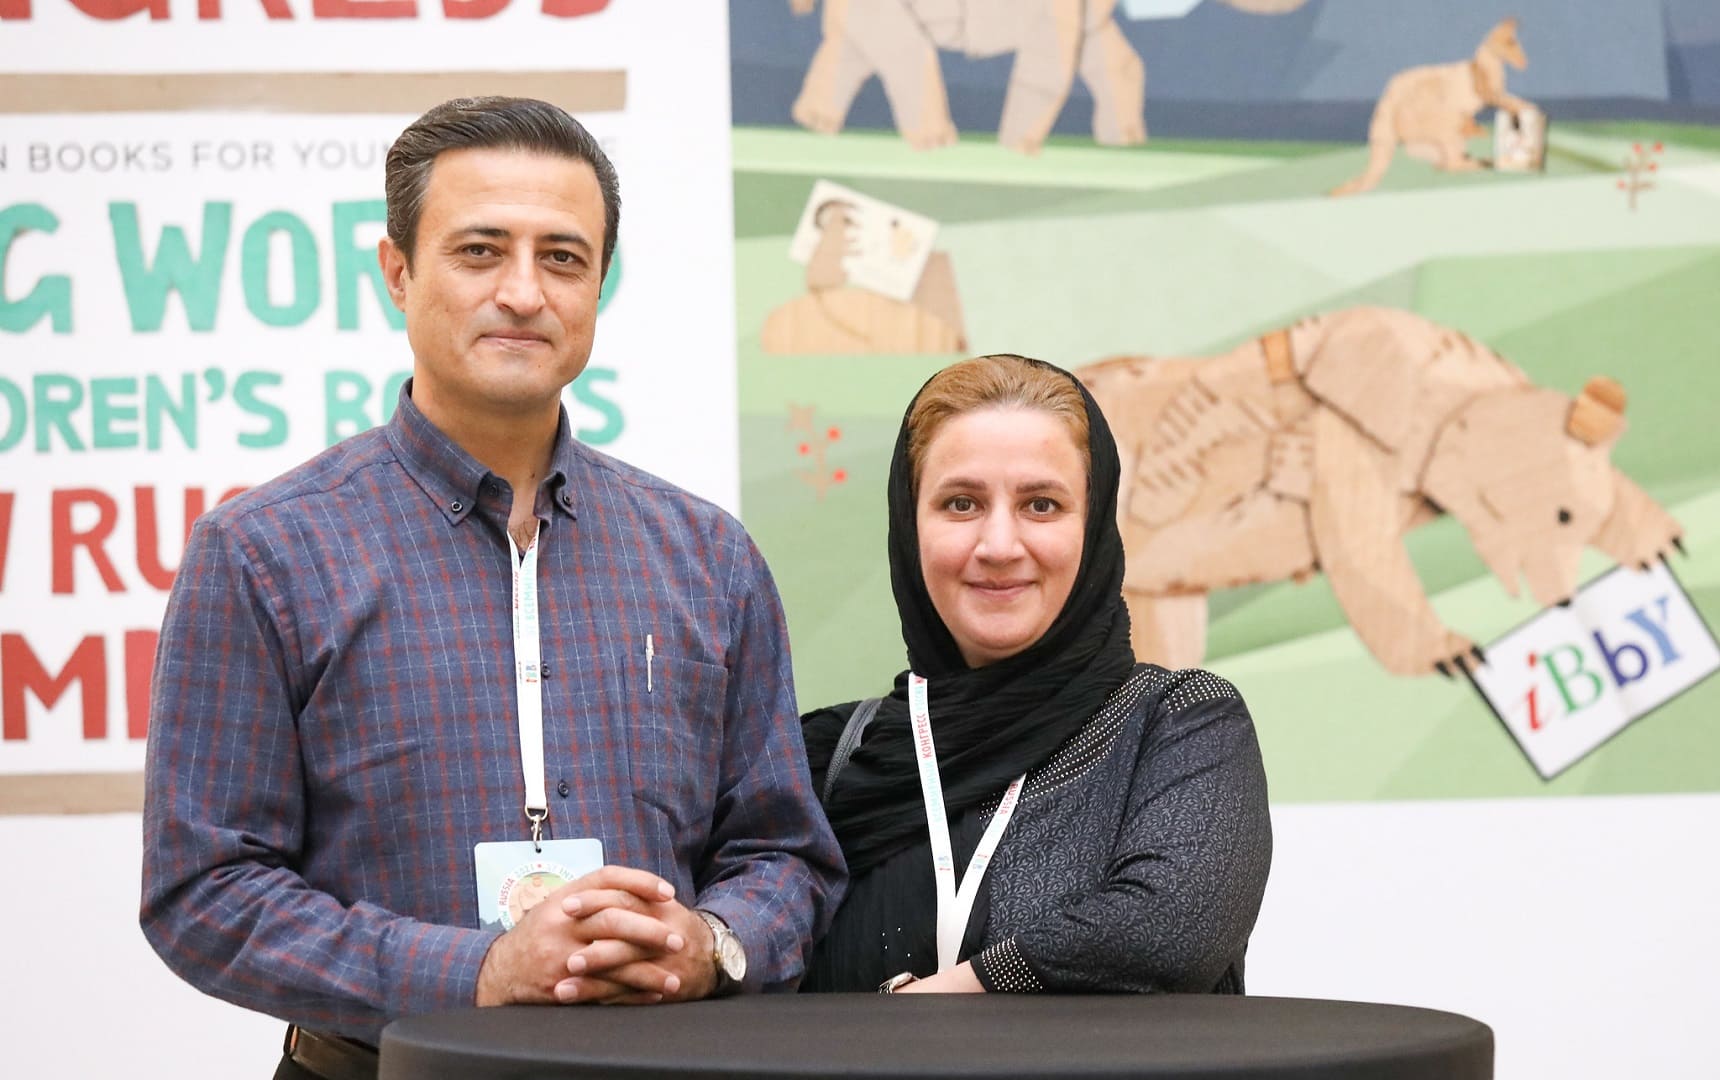 Участники 37го Всемирного конгресса Международного совета по детской книге (IBBY). Слева: Мохсен Хаджи Зейнолабедини